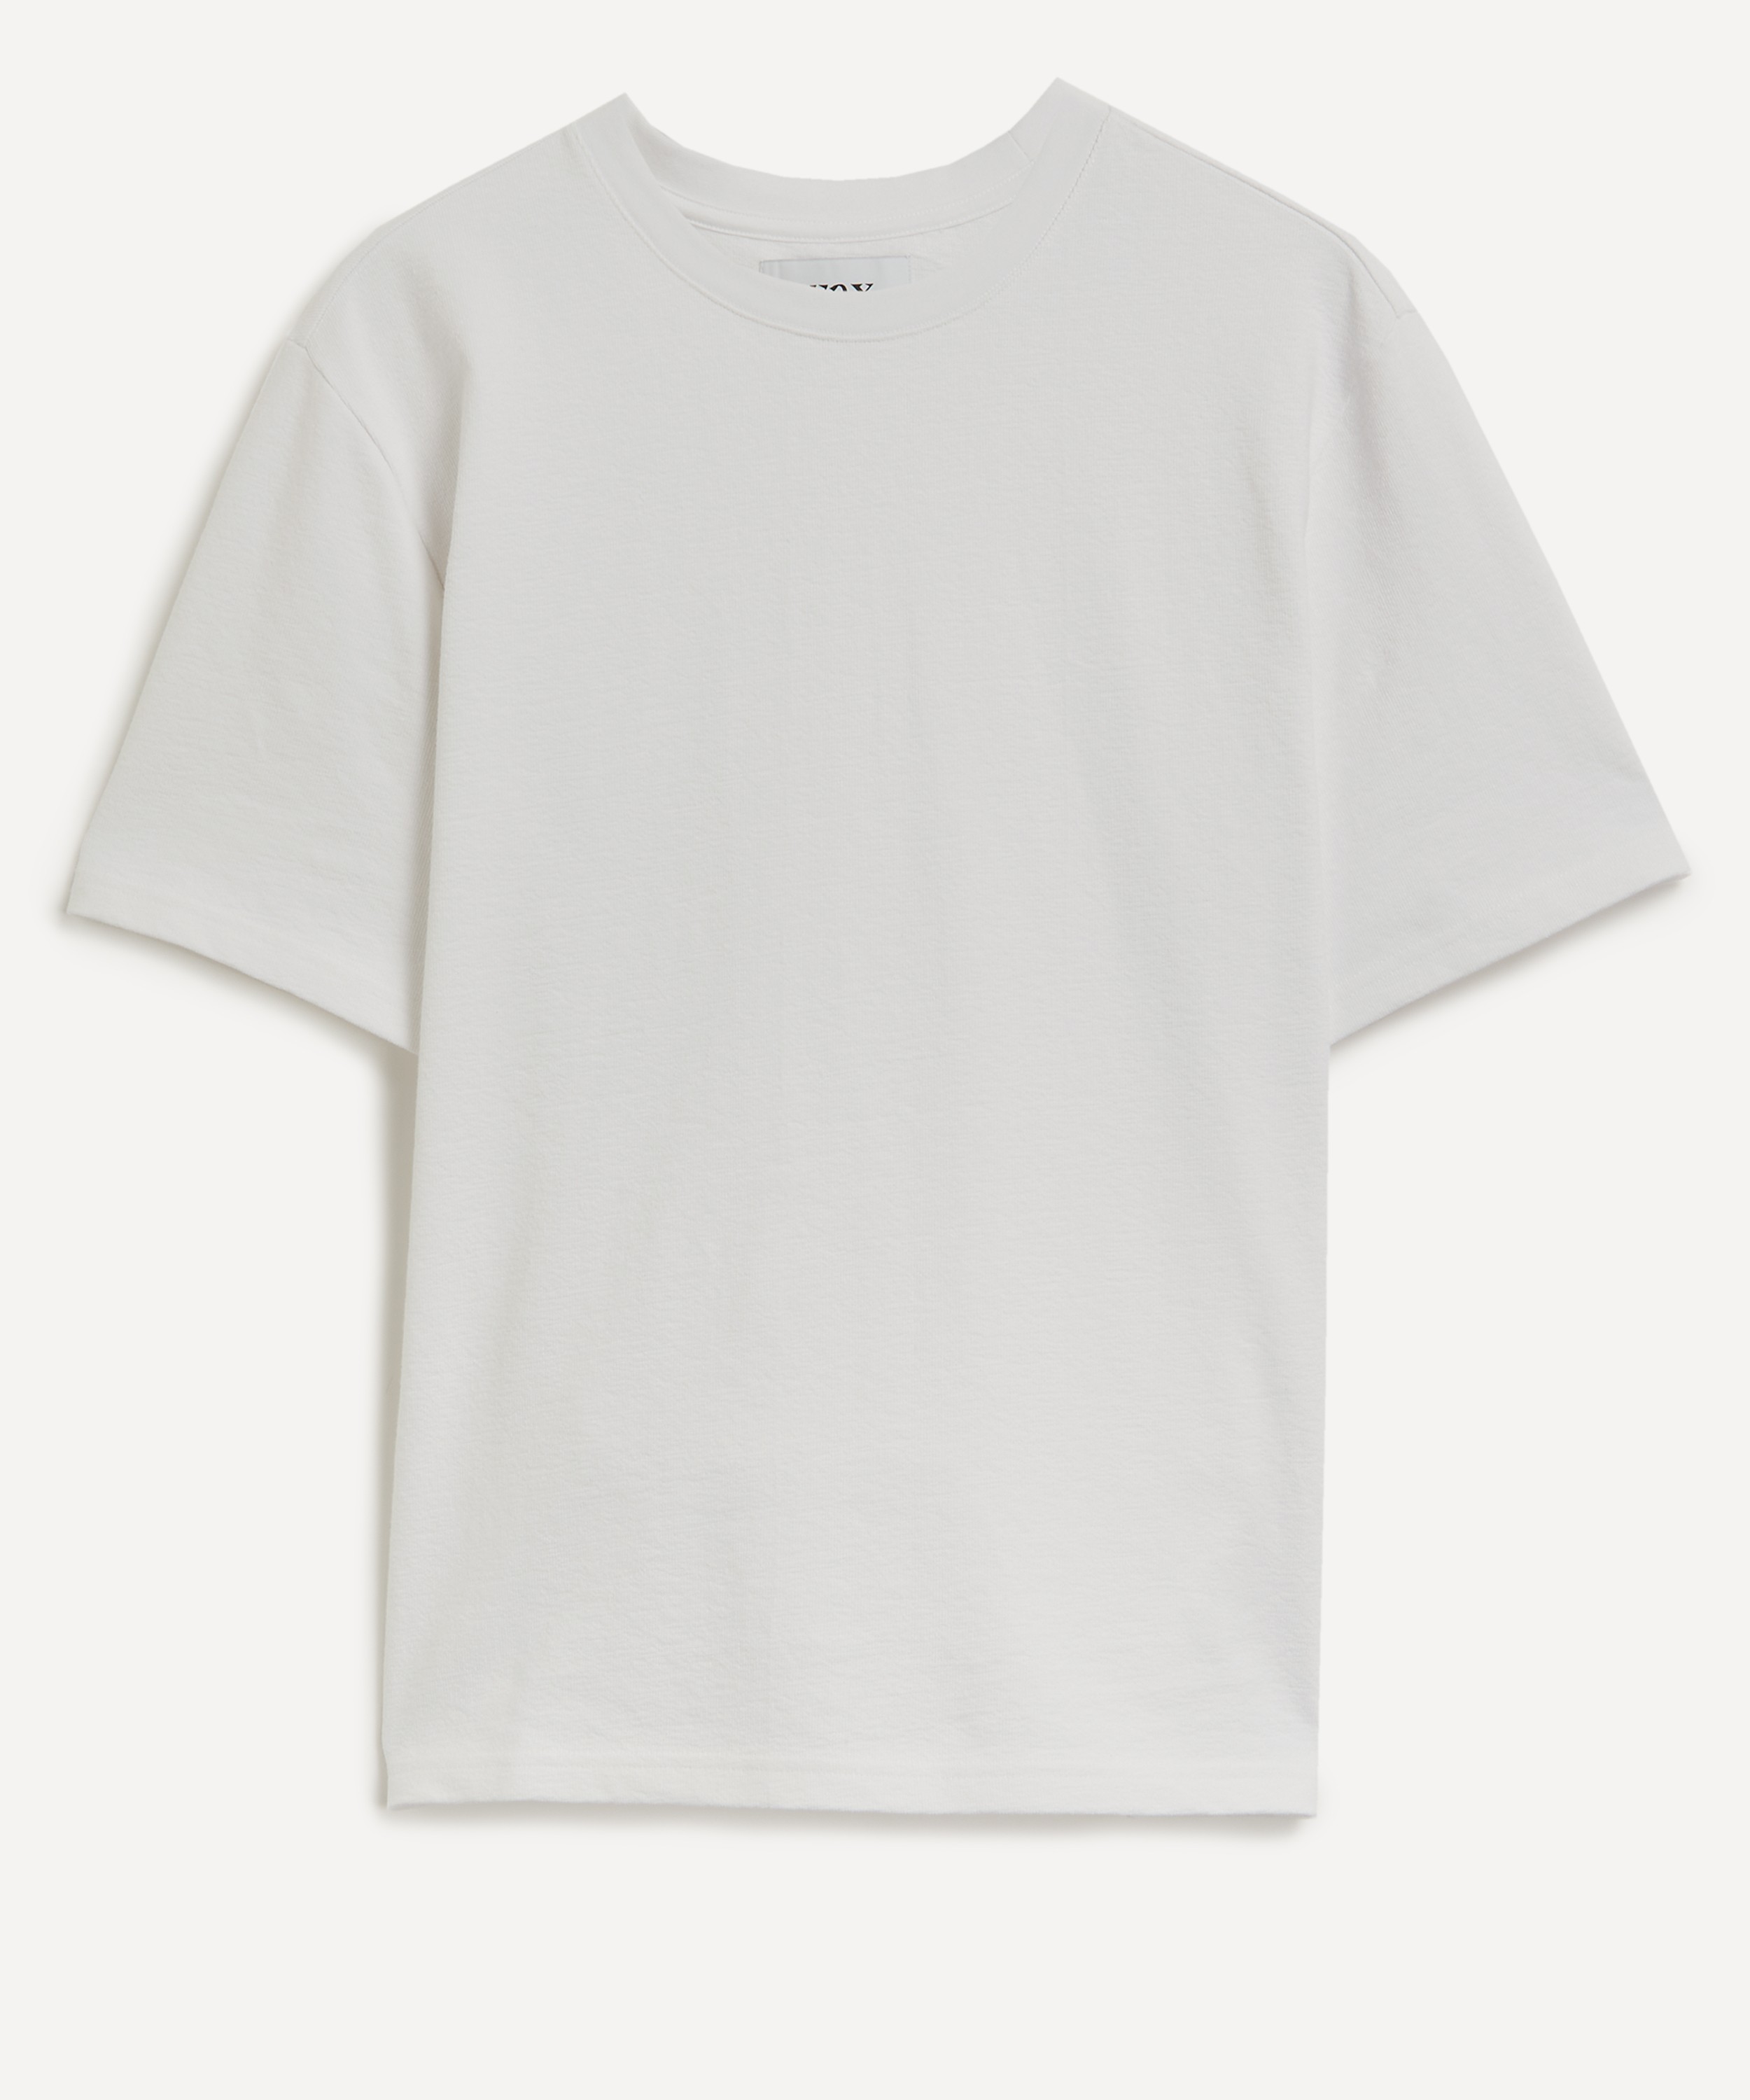 Wax London - Dean Textured Jolt White T-Shirt image number 0